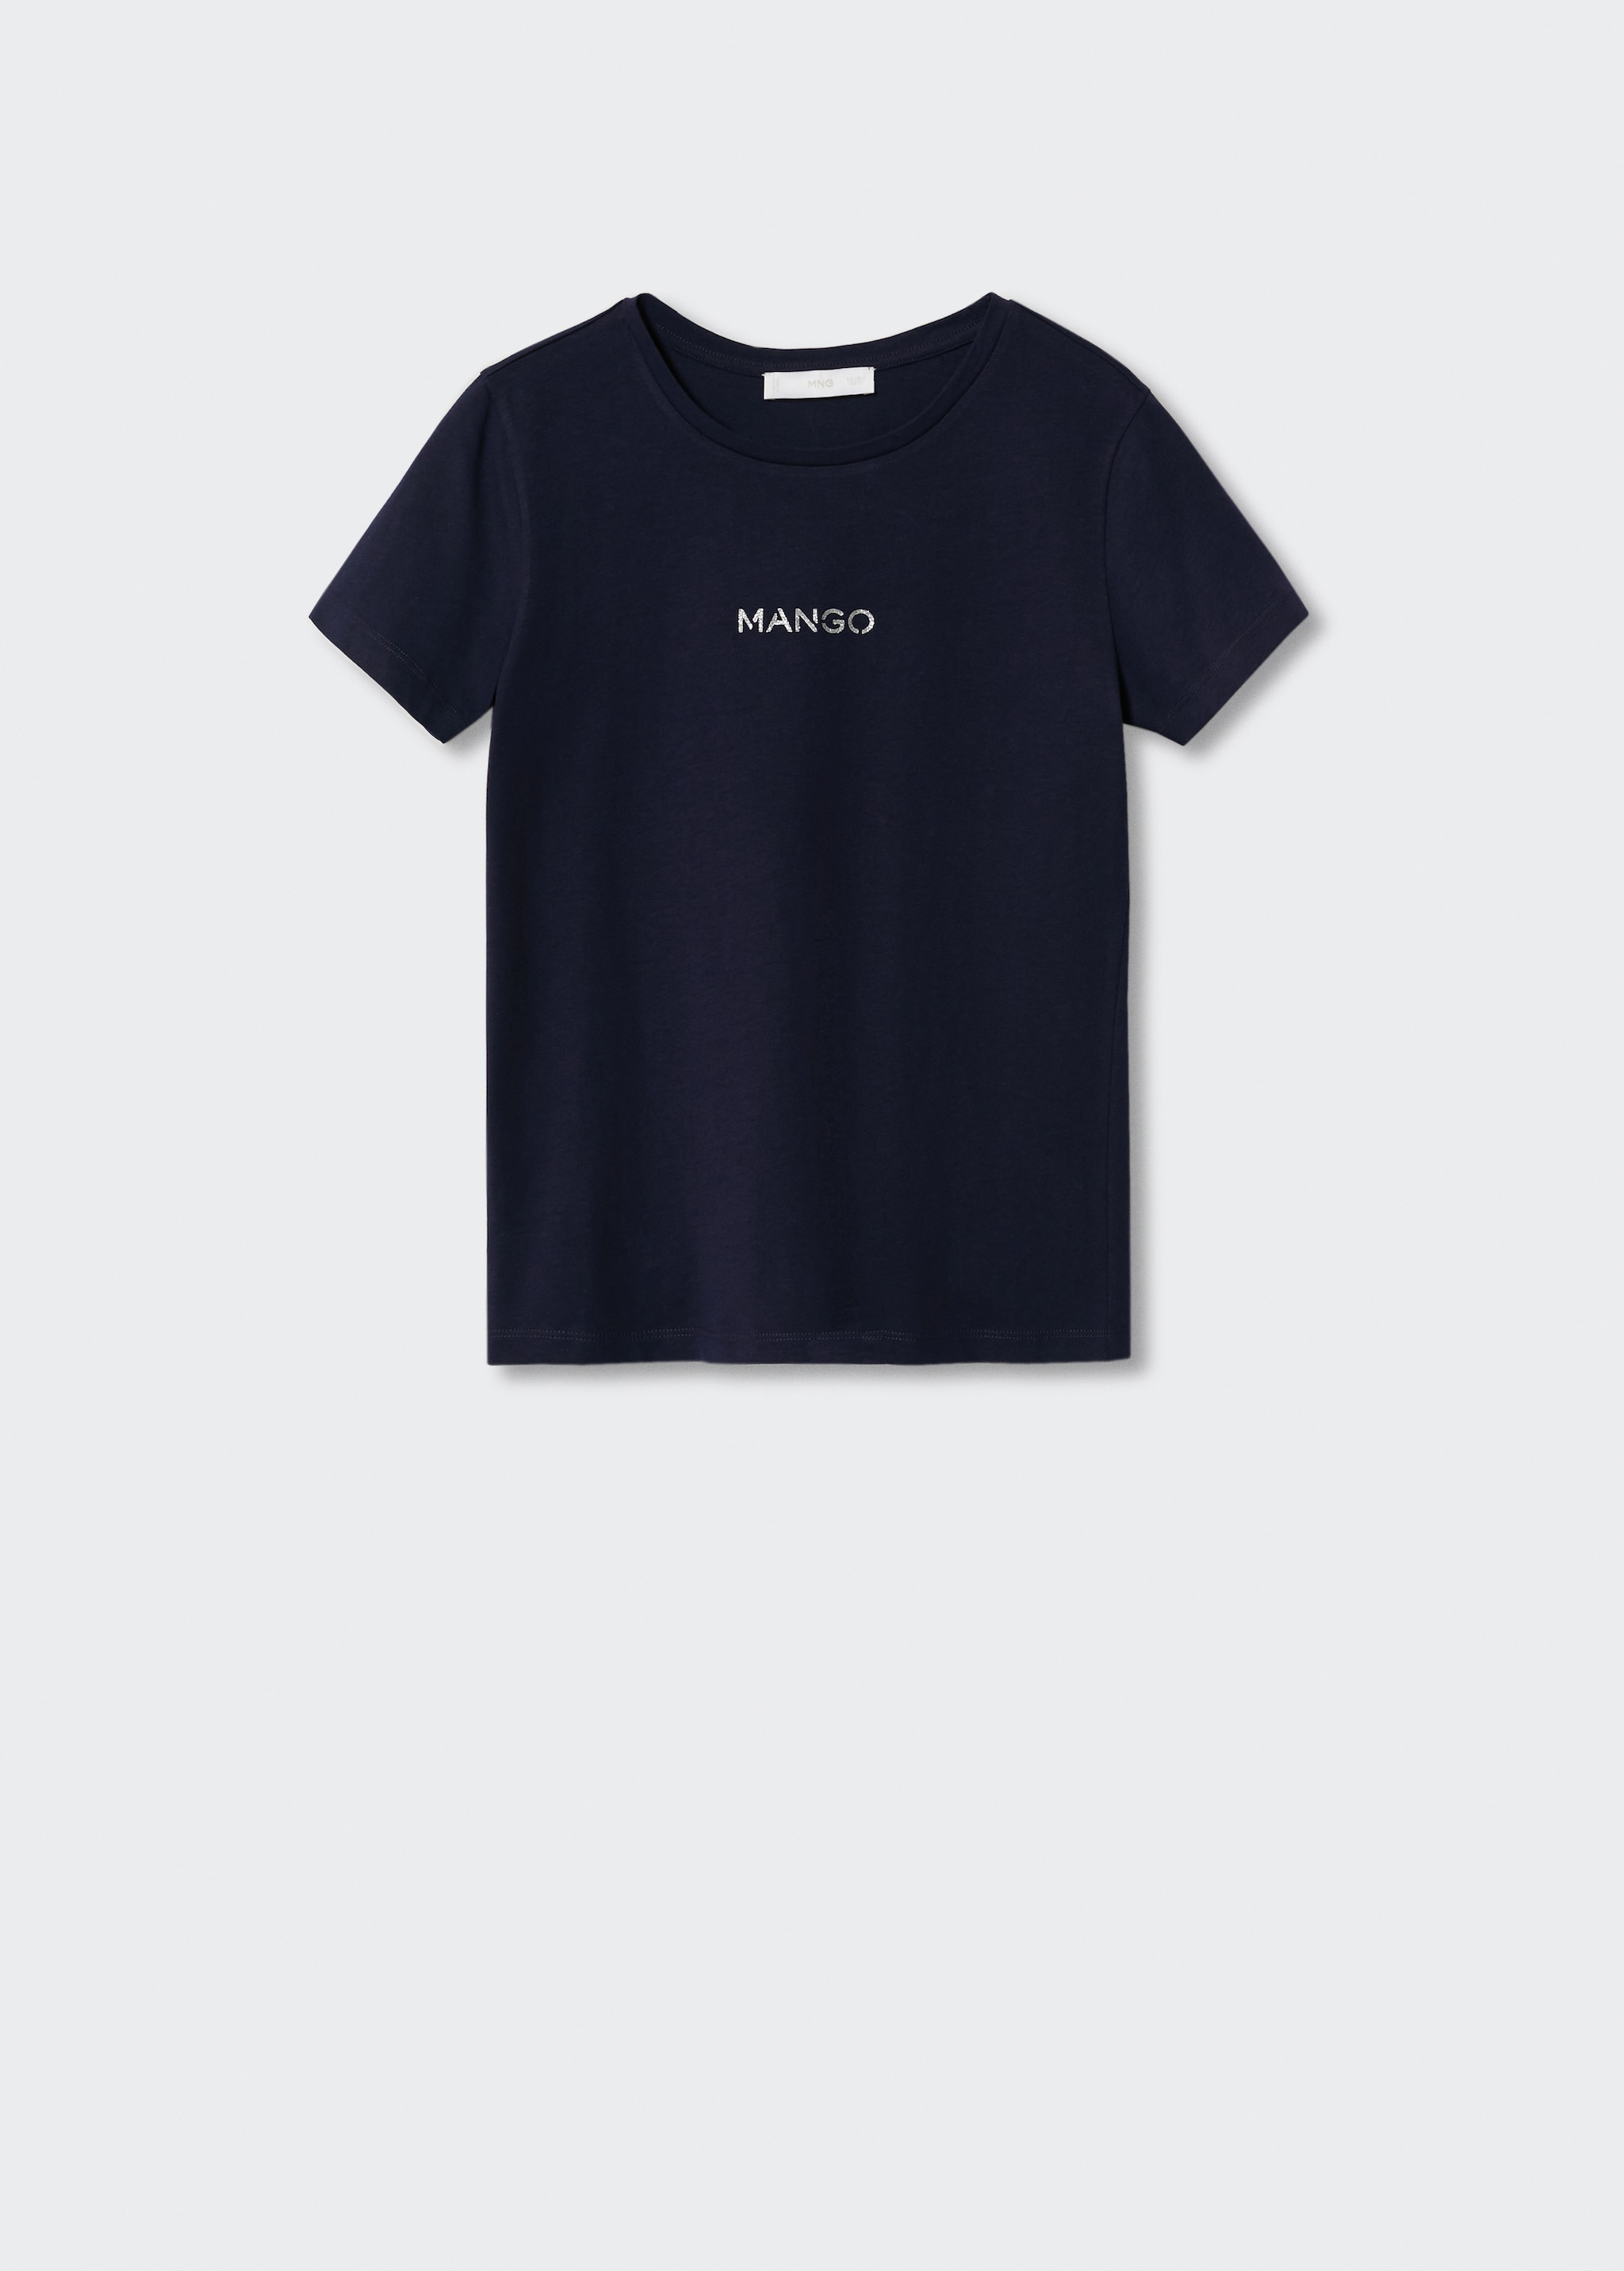 Shinning logo t-shirt - Article without model